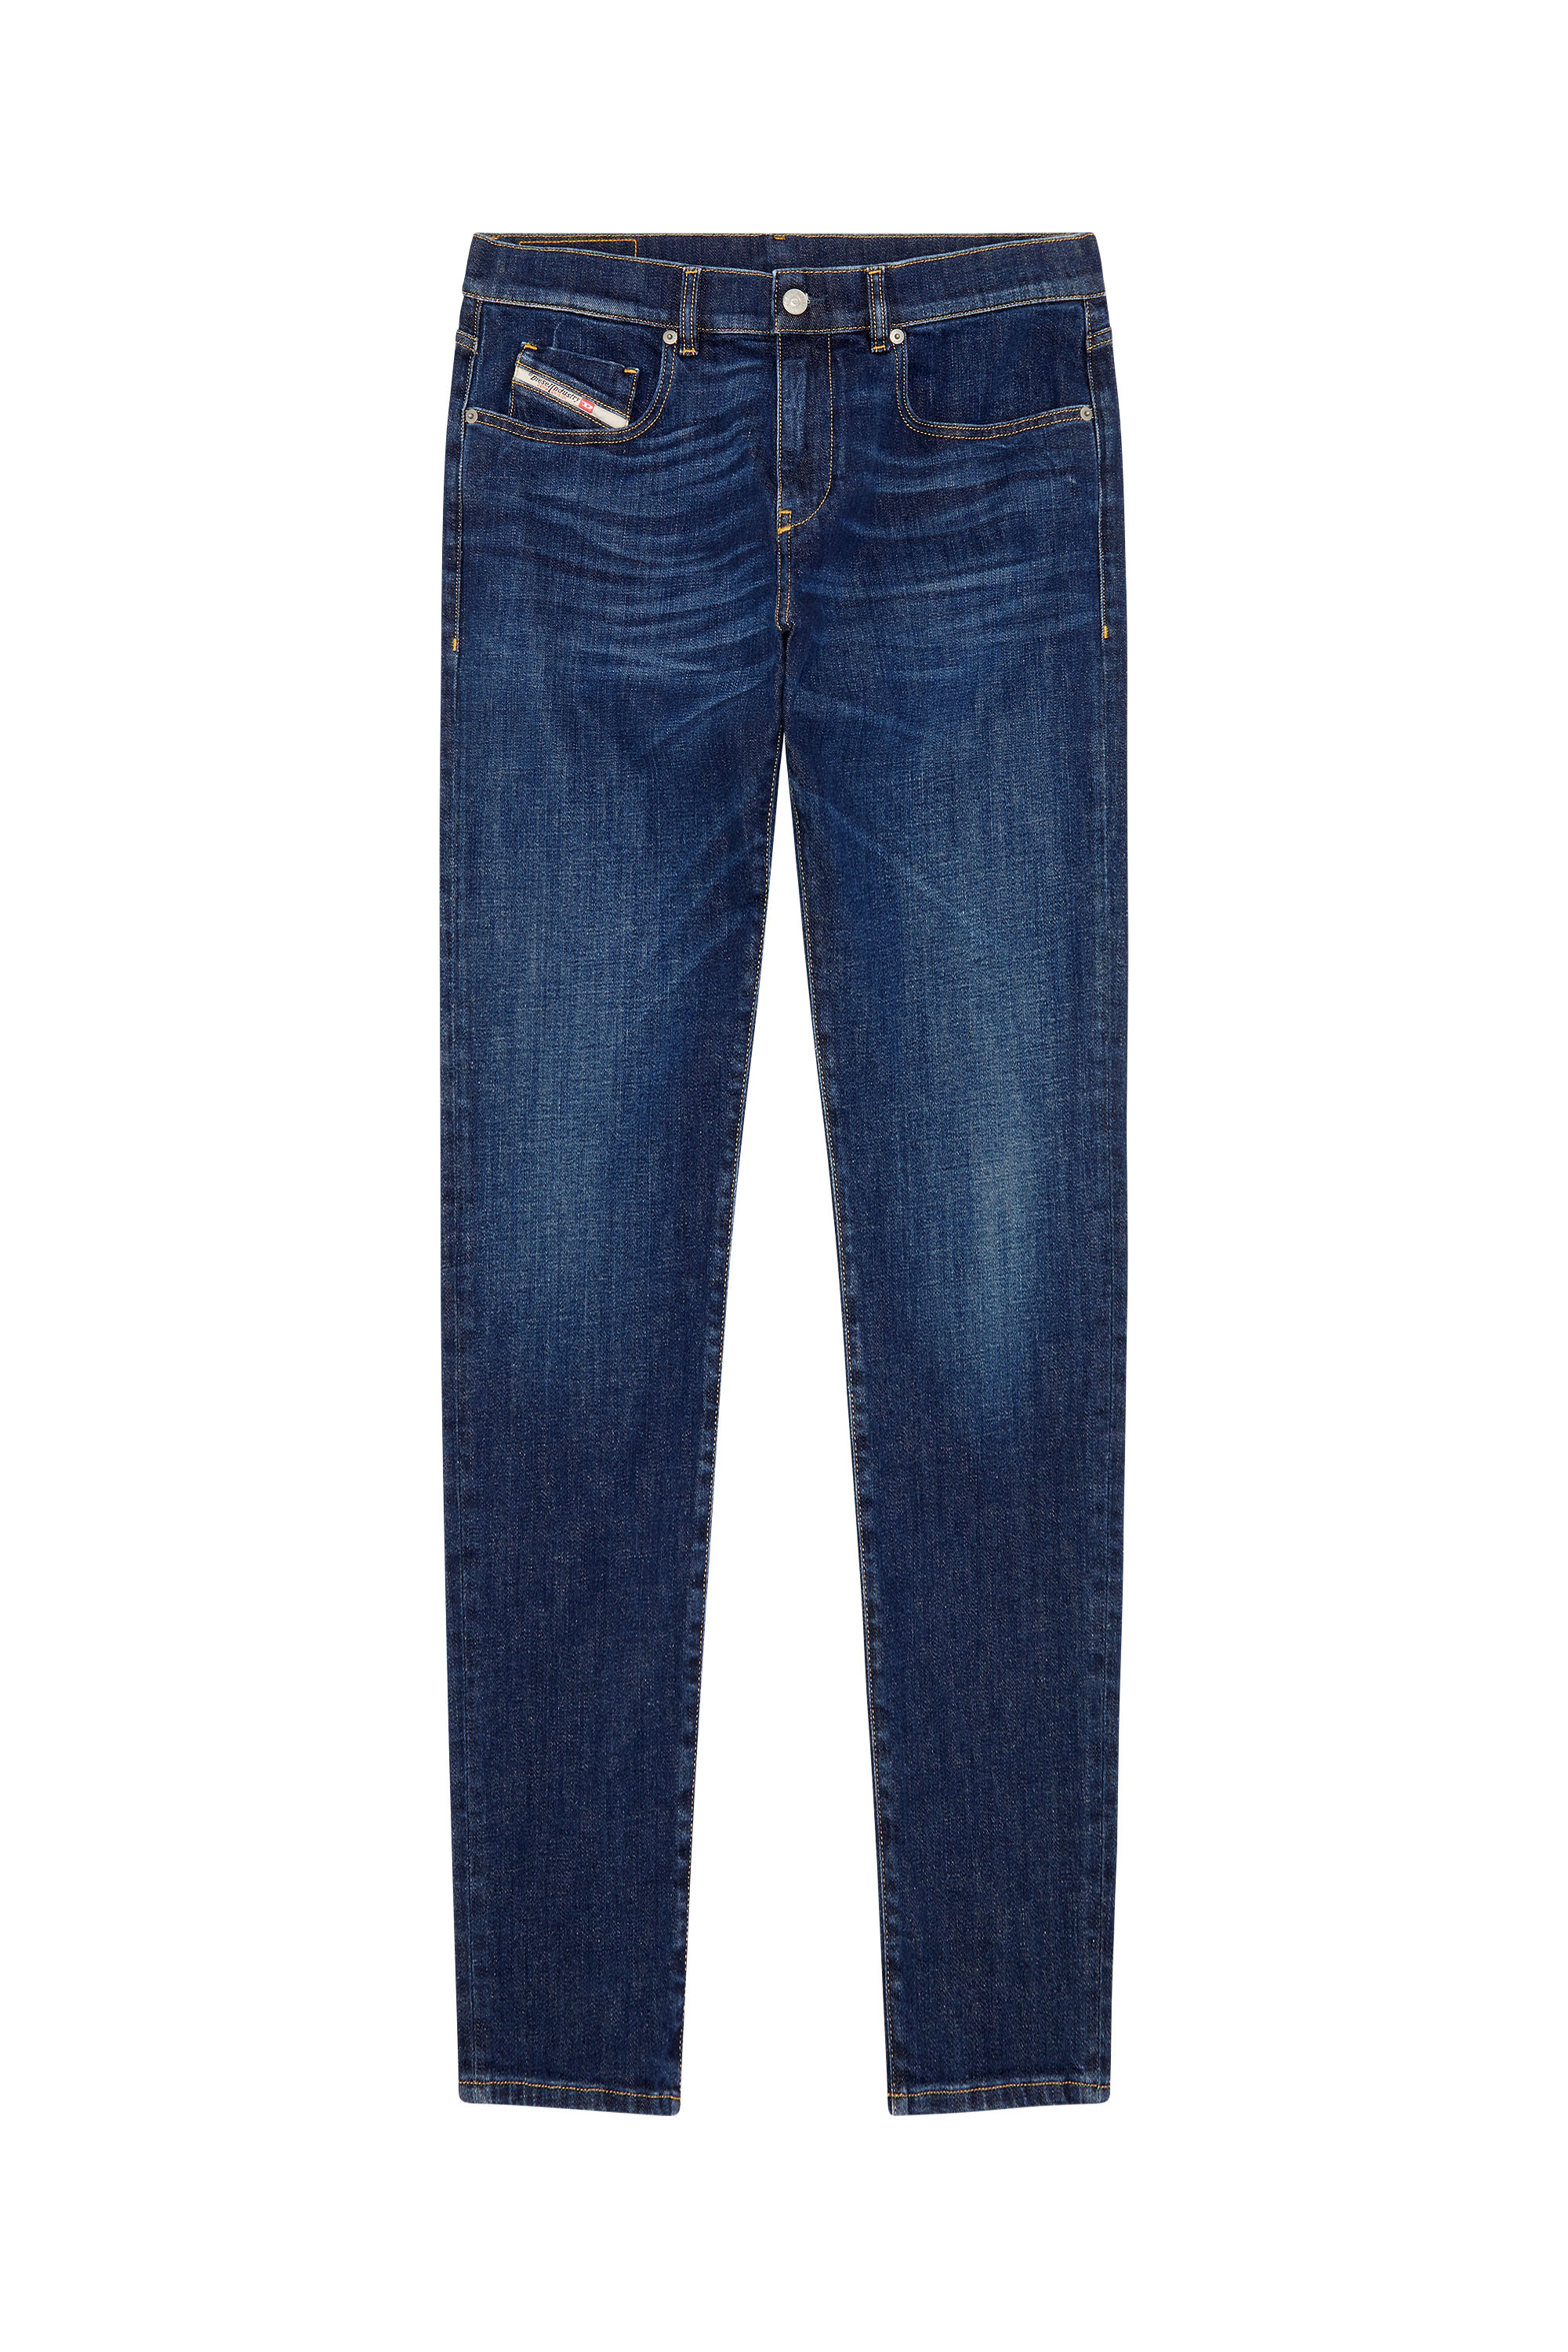 2019 D-STRUKT 09B90 Slim Jeans, Azul Oscuro - Vaqueros